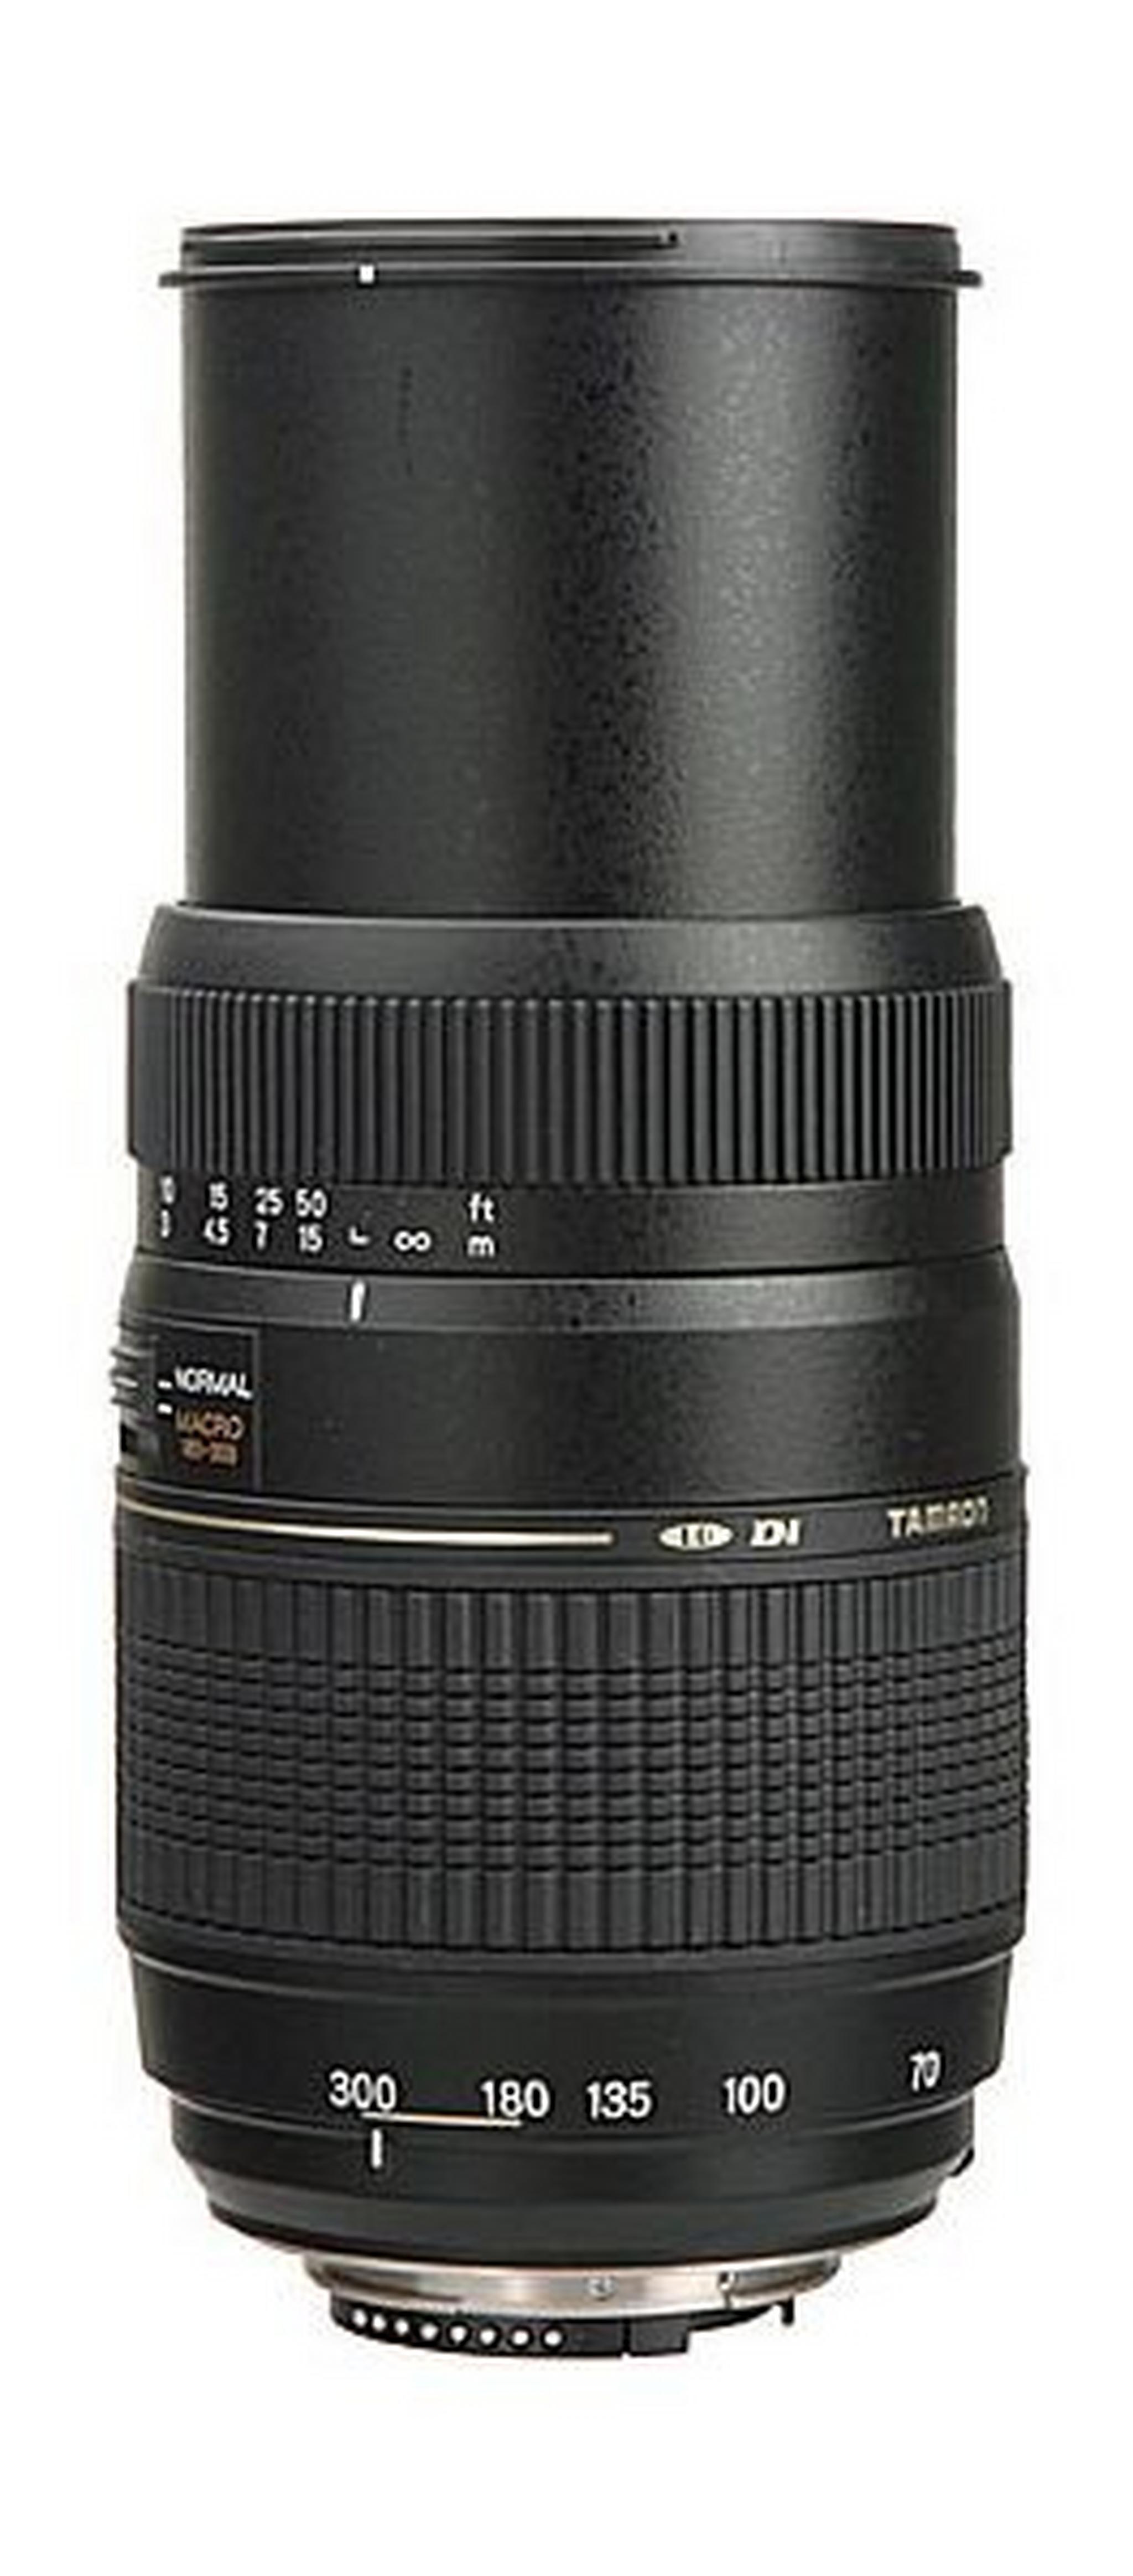 Tamron 70-300mm f/4-5.6 Di LD Macro Autofocus Lens for Nikon DSLR Camera